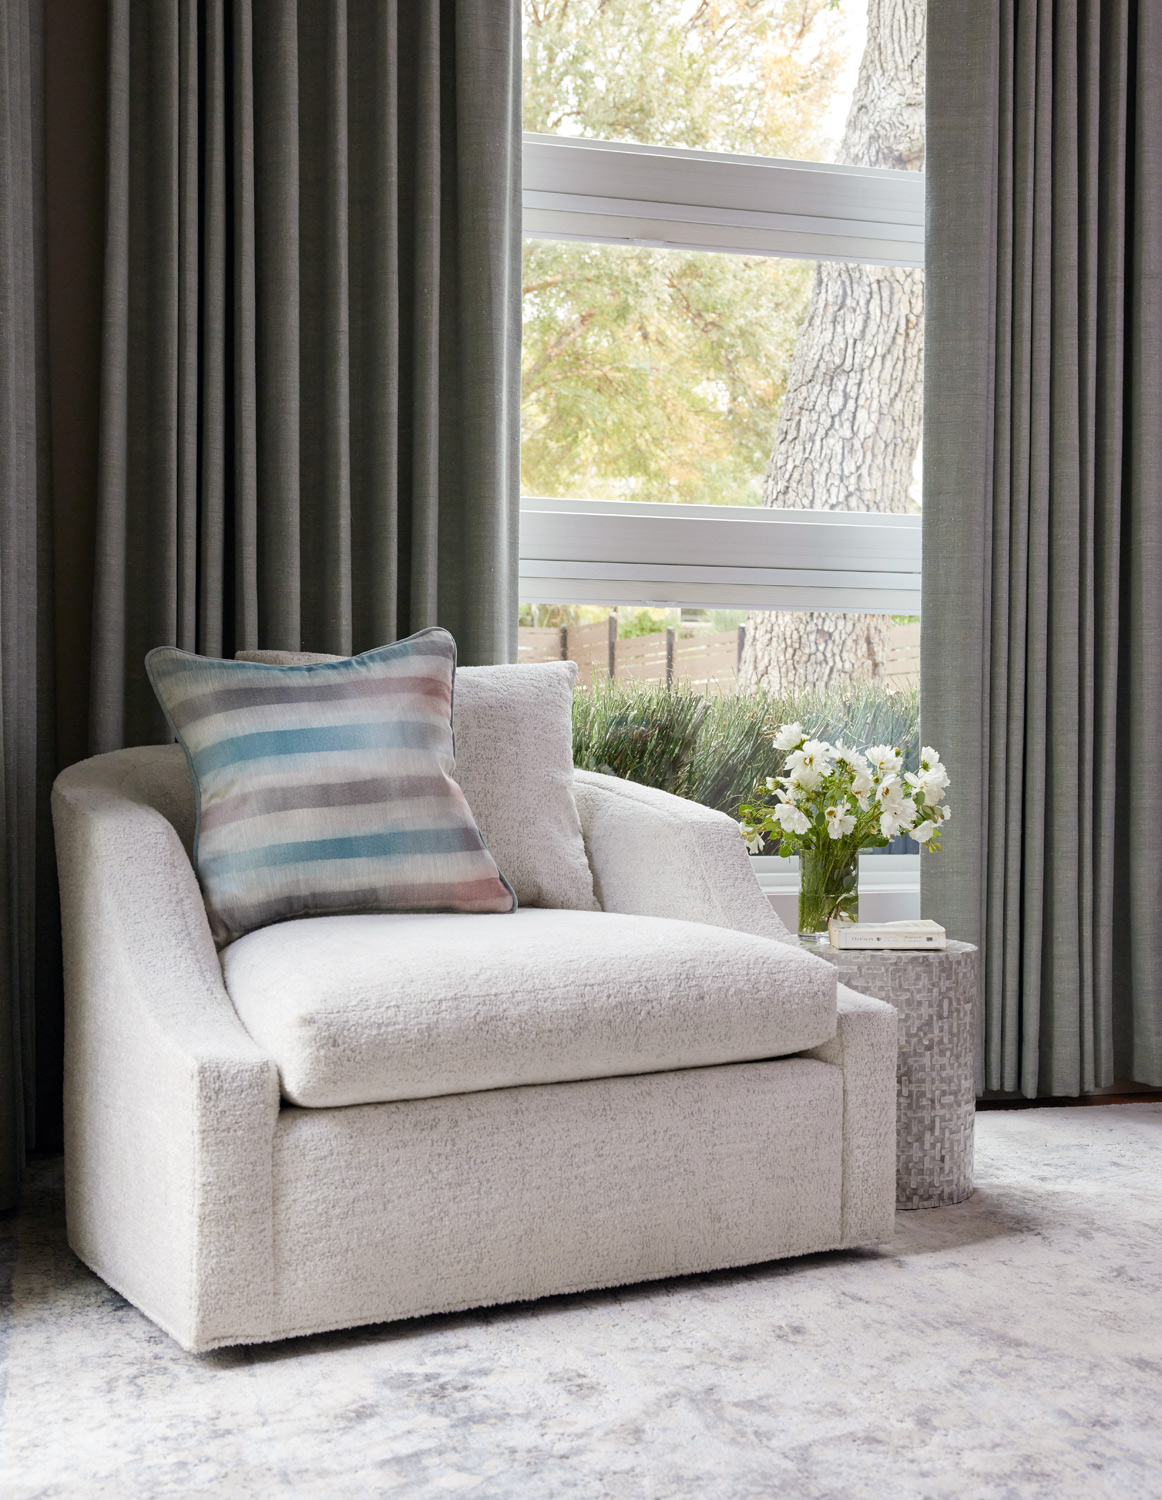 Cozy elegant nook by interior photographer Buff Strickland